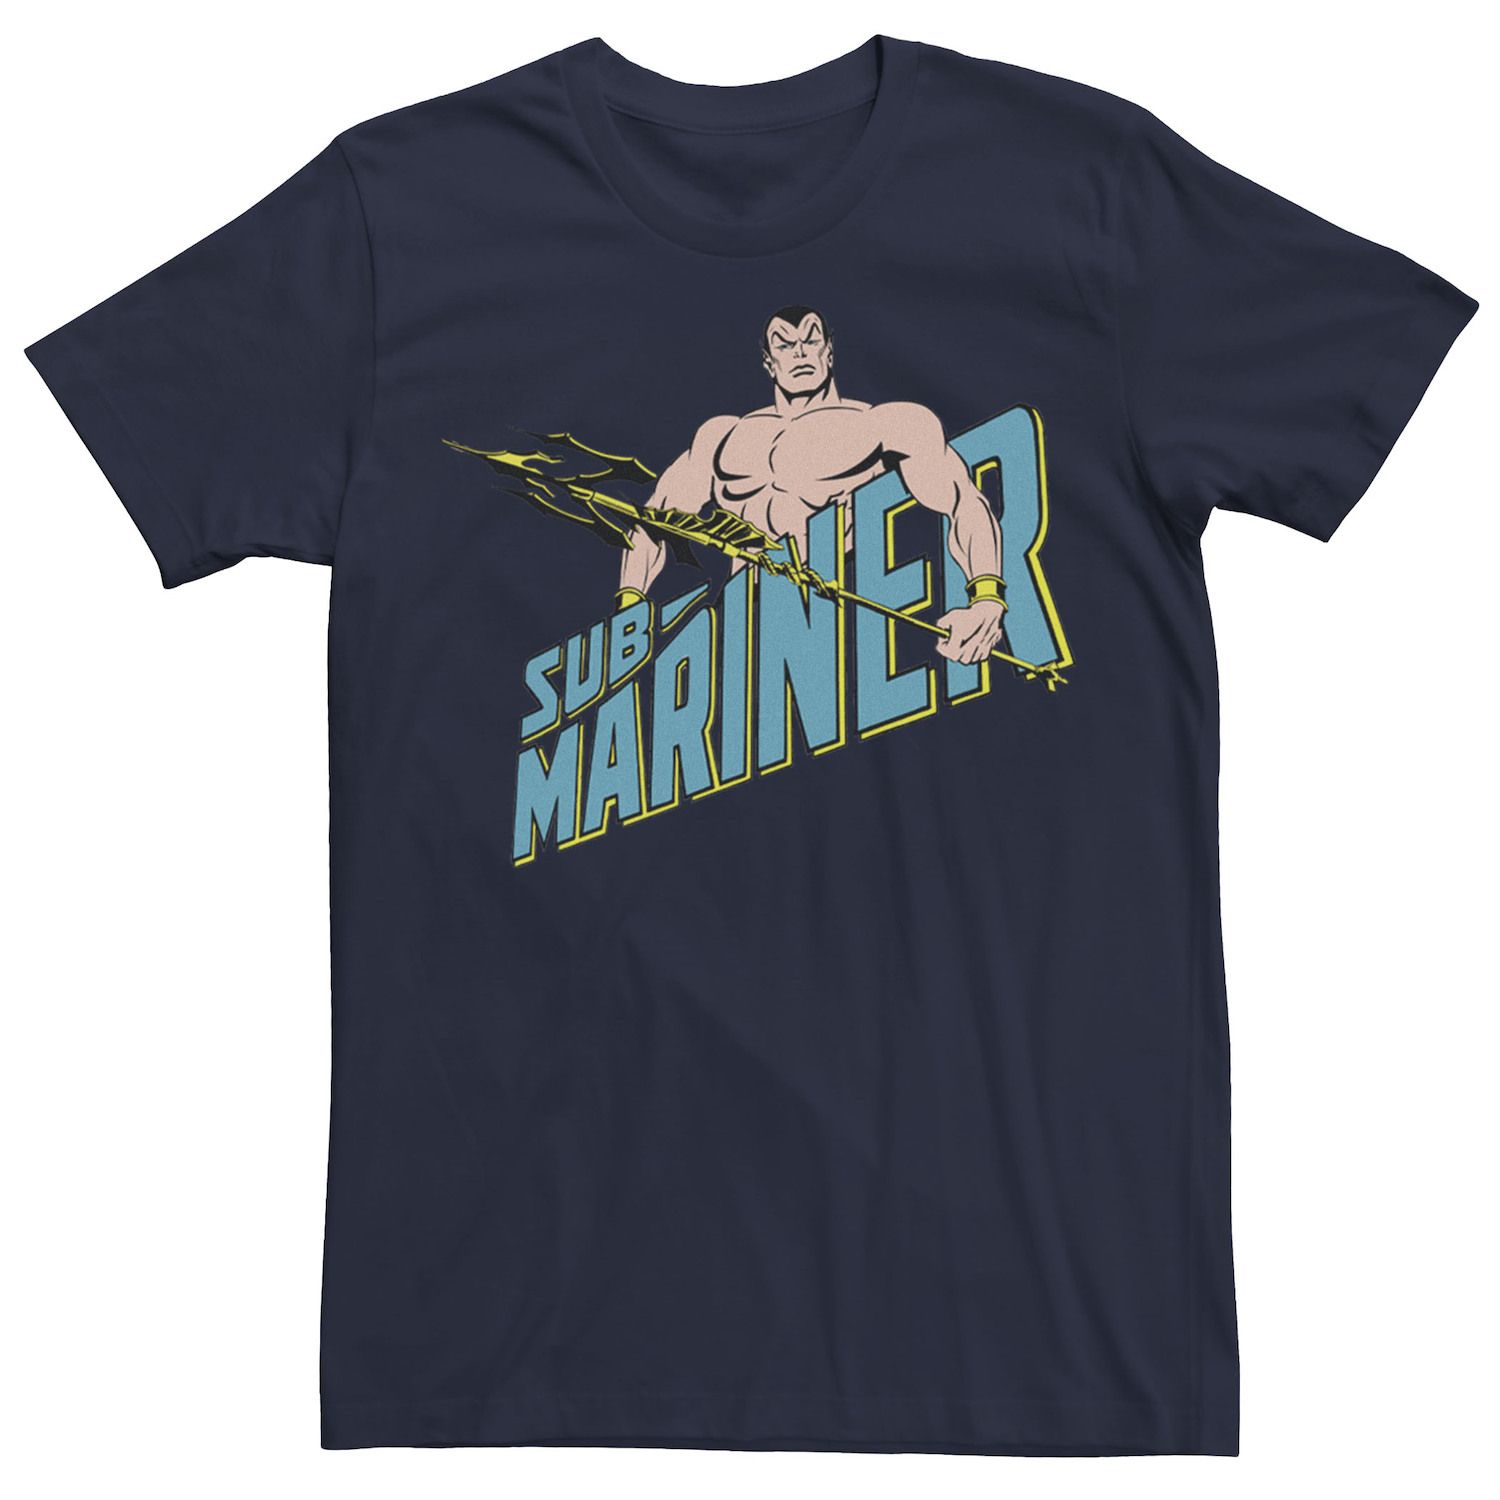 Мужская футболка Sub-Mariner с портретом Marvel